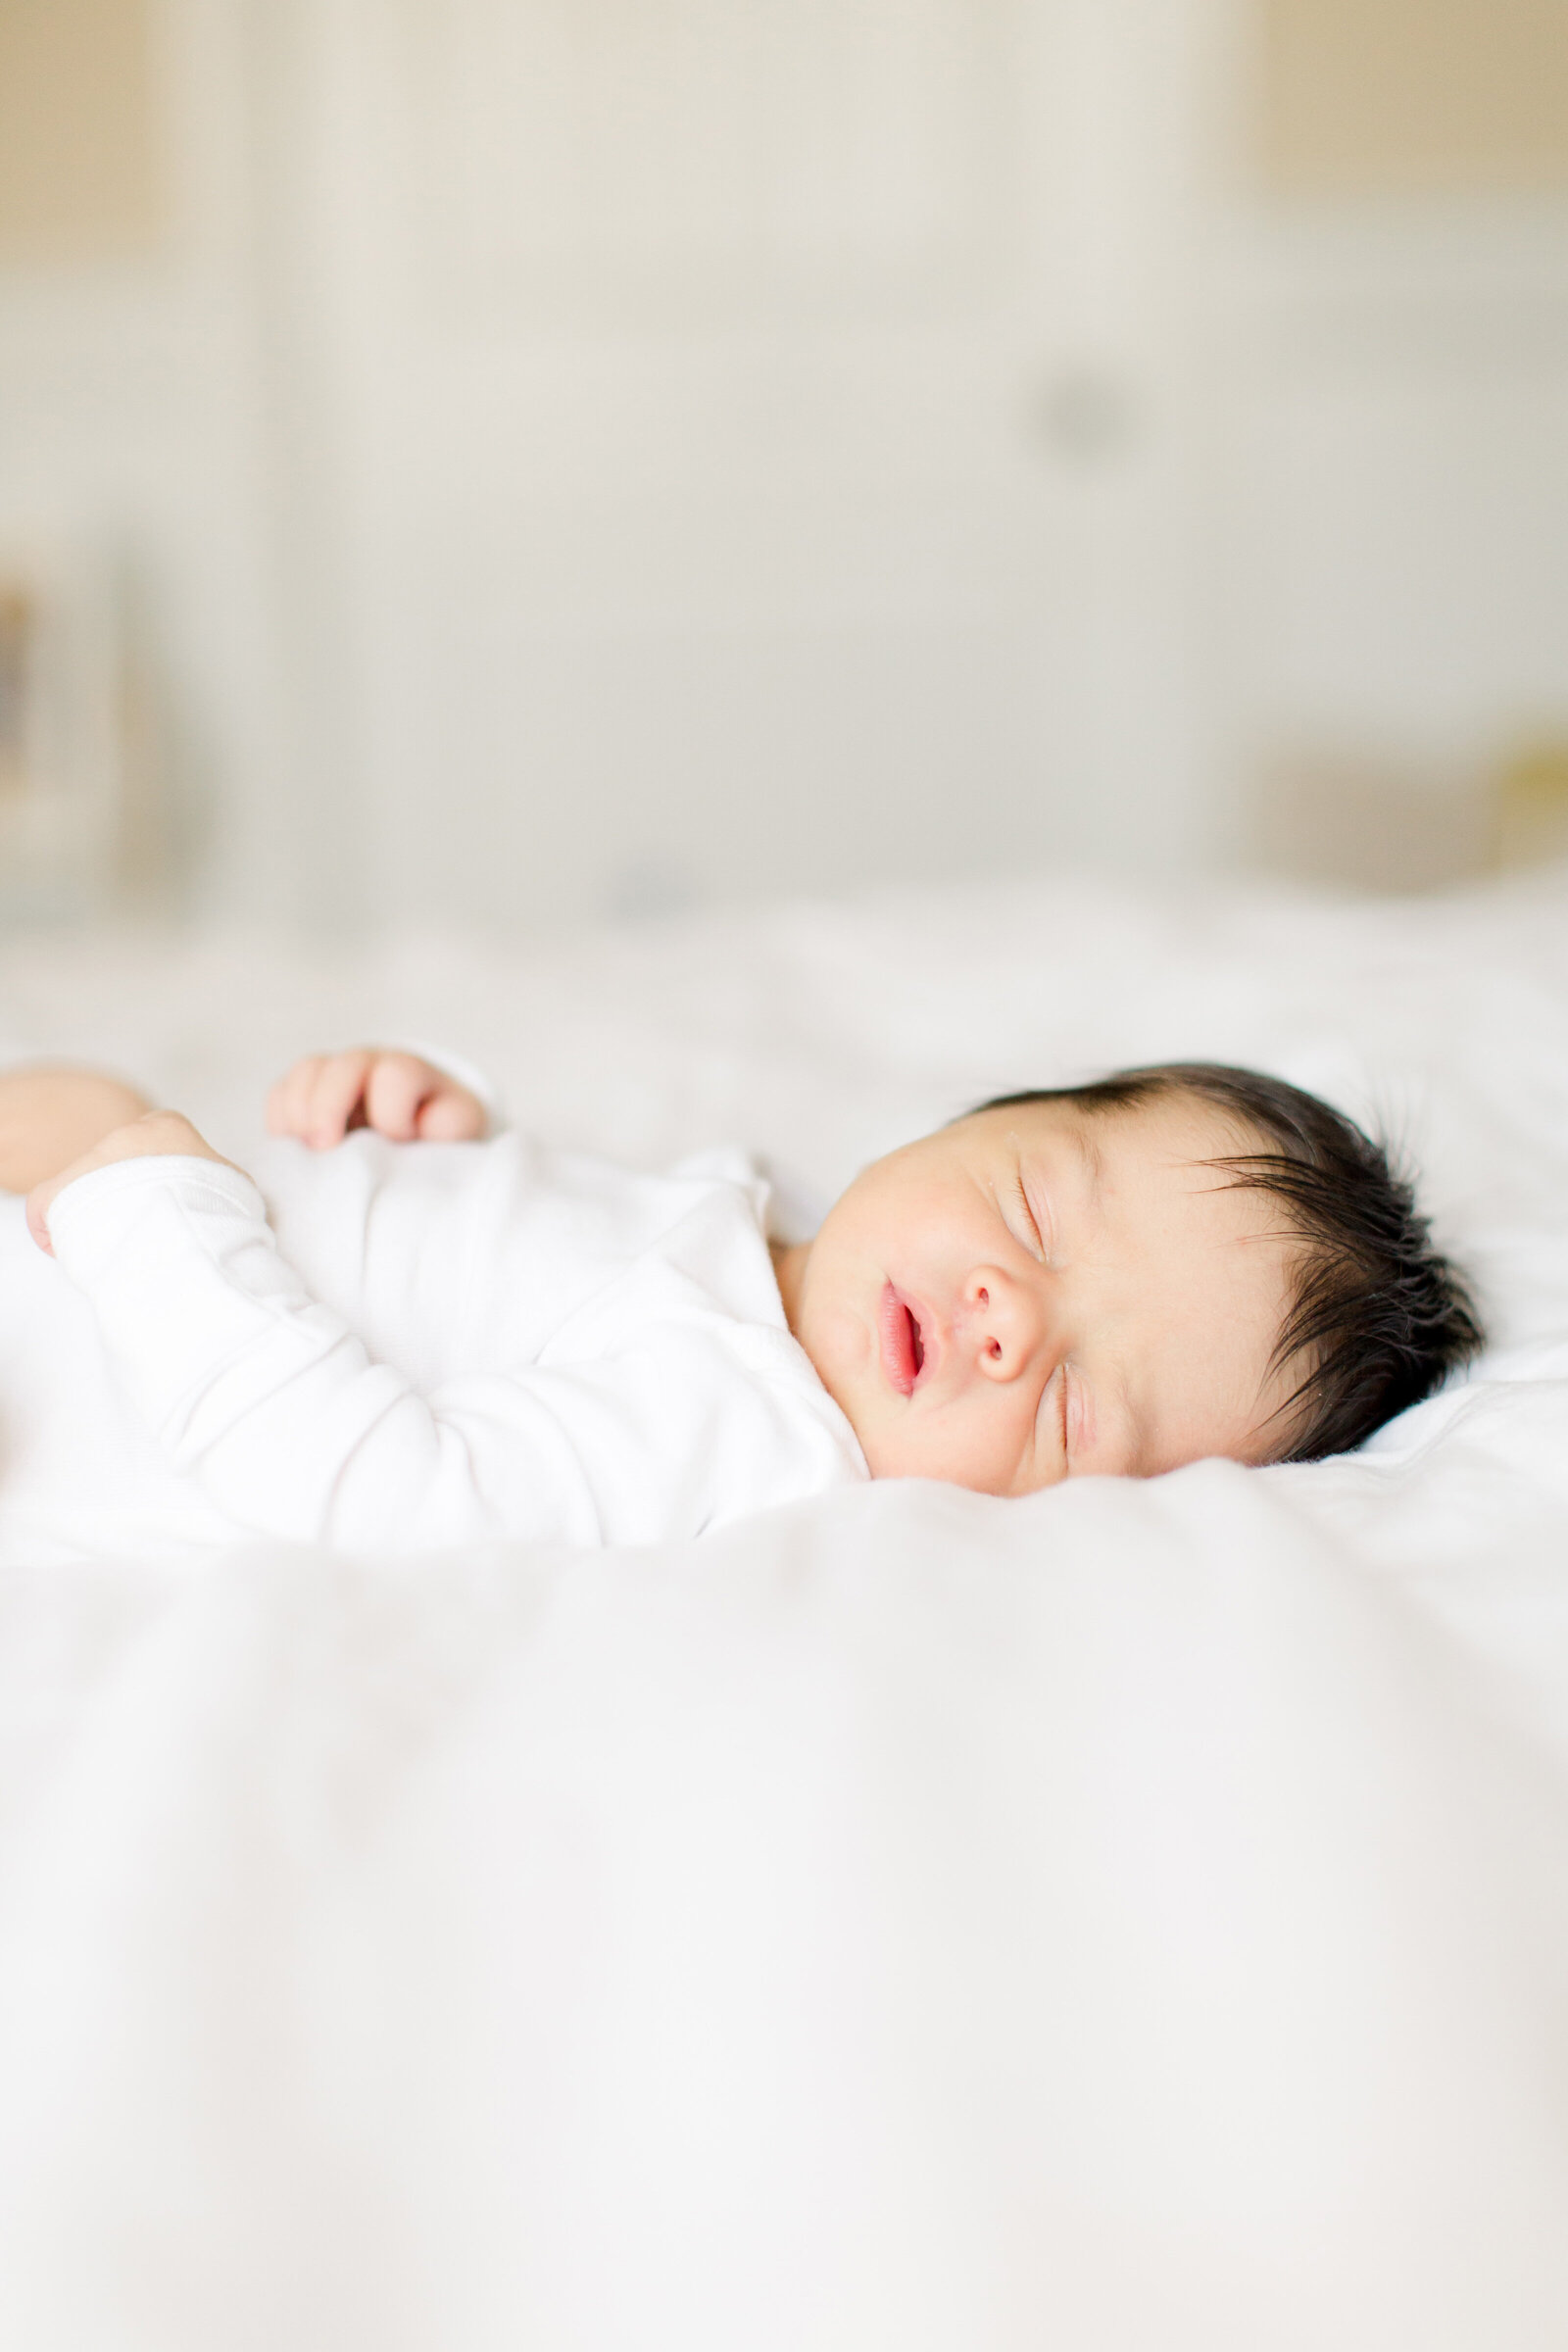 lexington-ky-newborn-photography-by-priscilla-baierlein-231